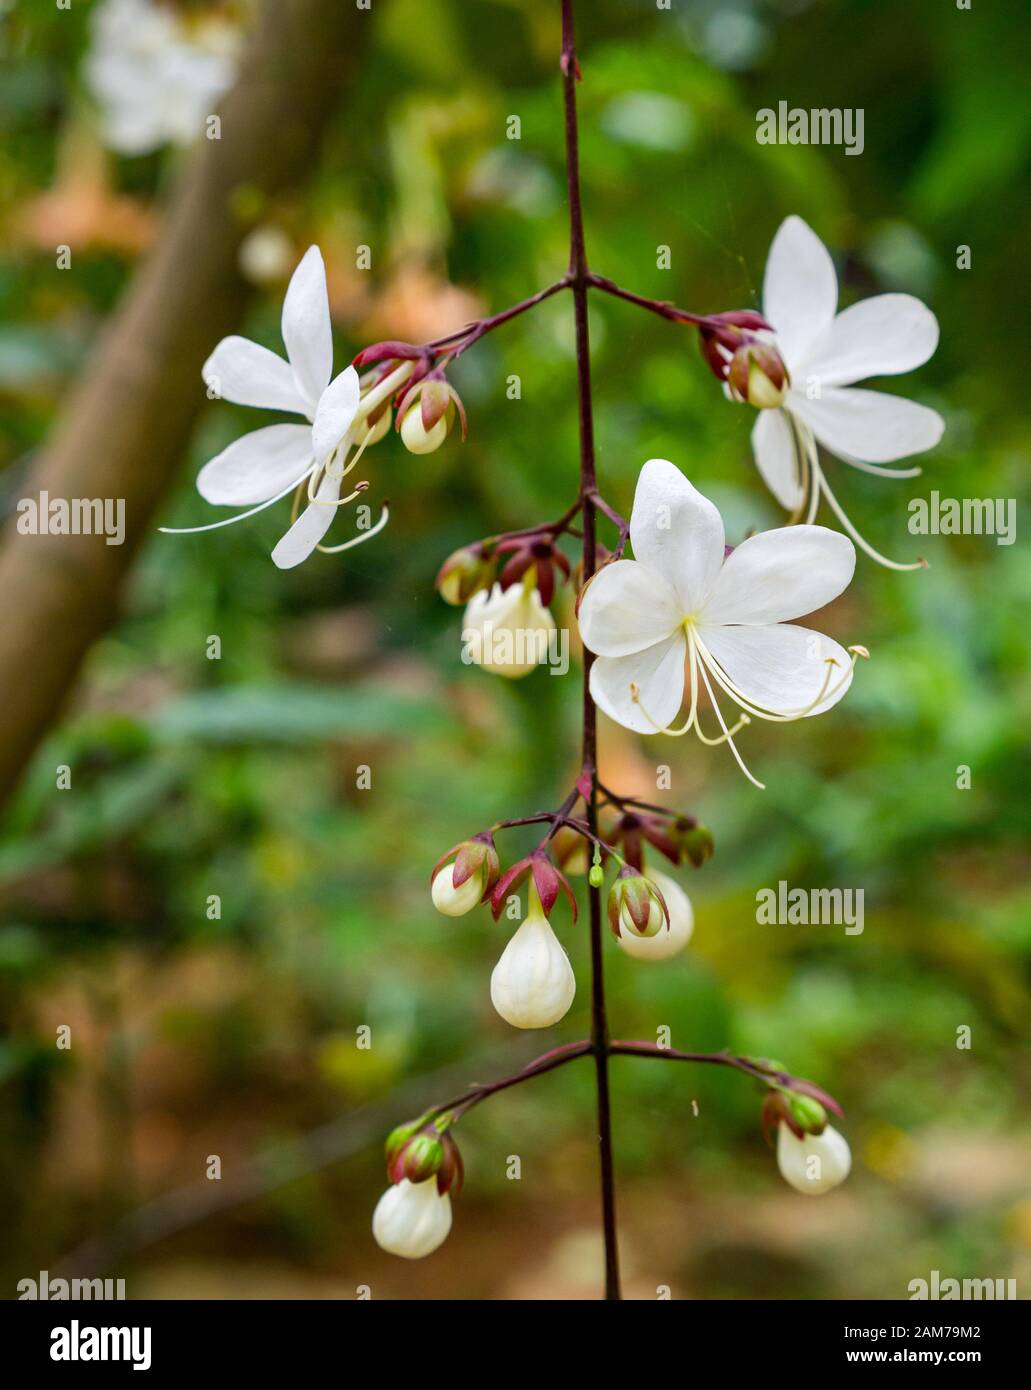 Pretty white flowers on chains of glory plant, Clerodendrum schmitii, Tam Coc Garden resort, Ninh Binh, Vietnam, Asia Stock Photo